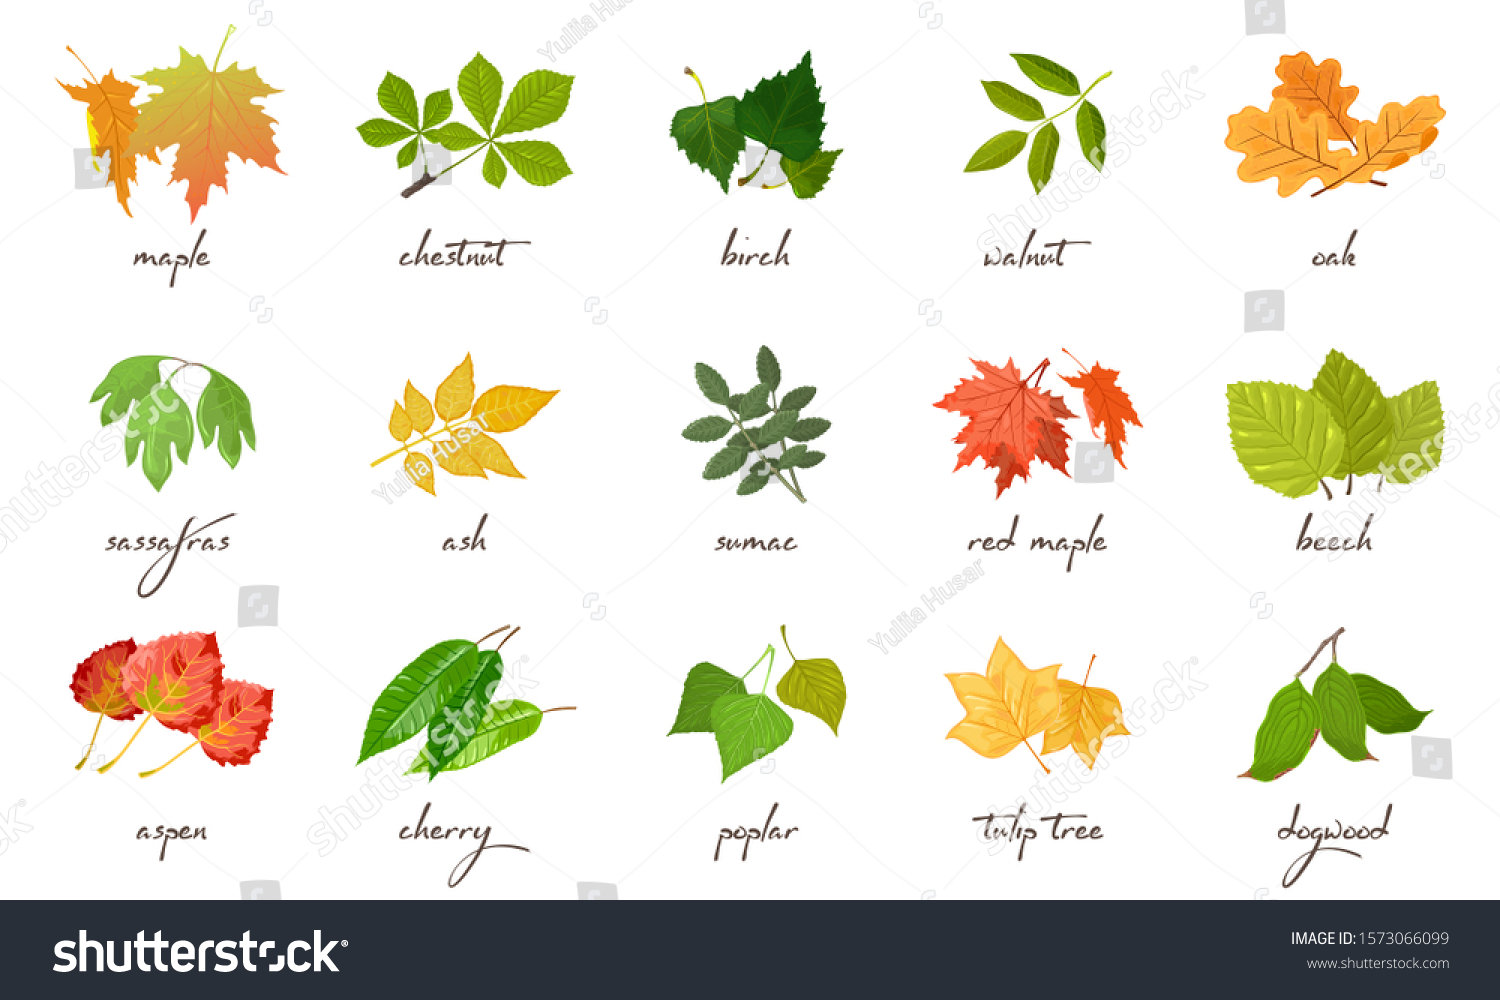 SVG of Big vector set with yellow, red, green leaves of different trees and shrubs maple, chestnut, birch, walnut, ash, sumac, beech, aspen, cherry, poplar, tulip oak sassafras dogwood Lettering svg